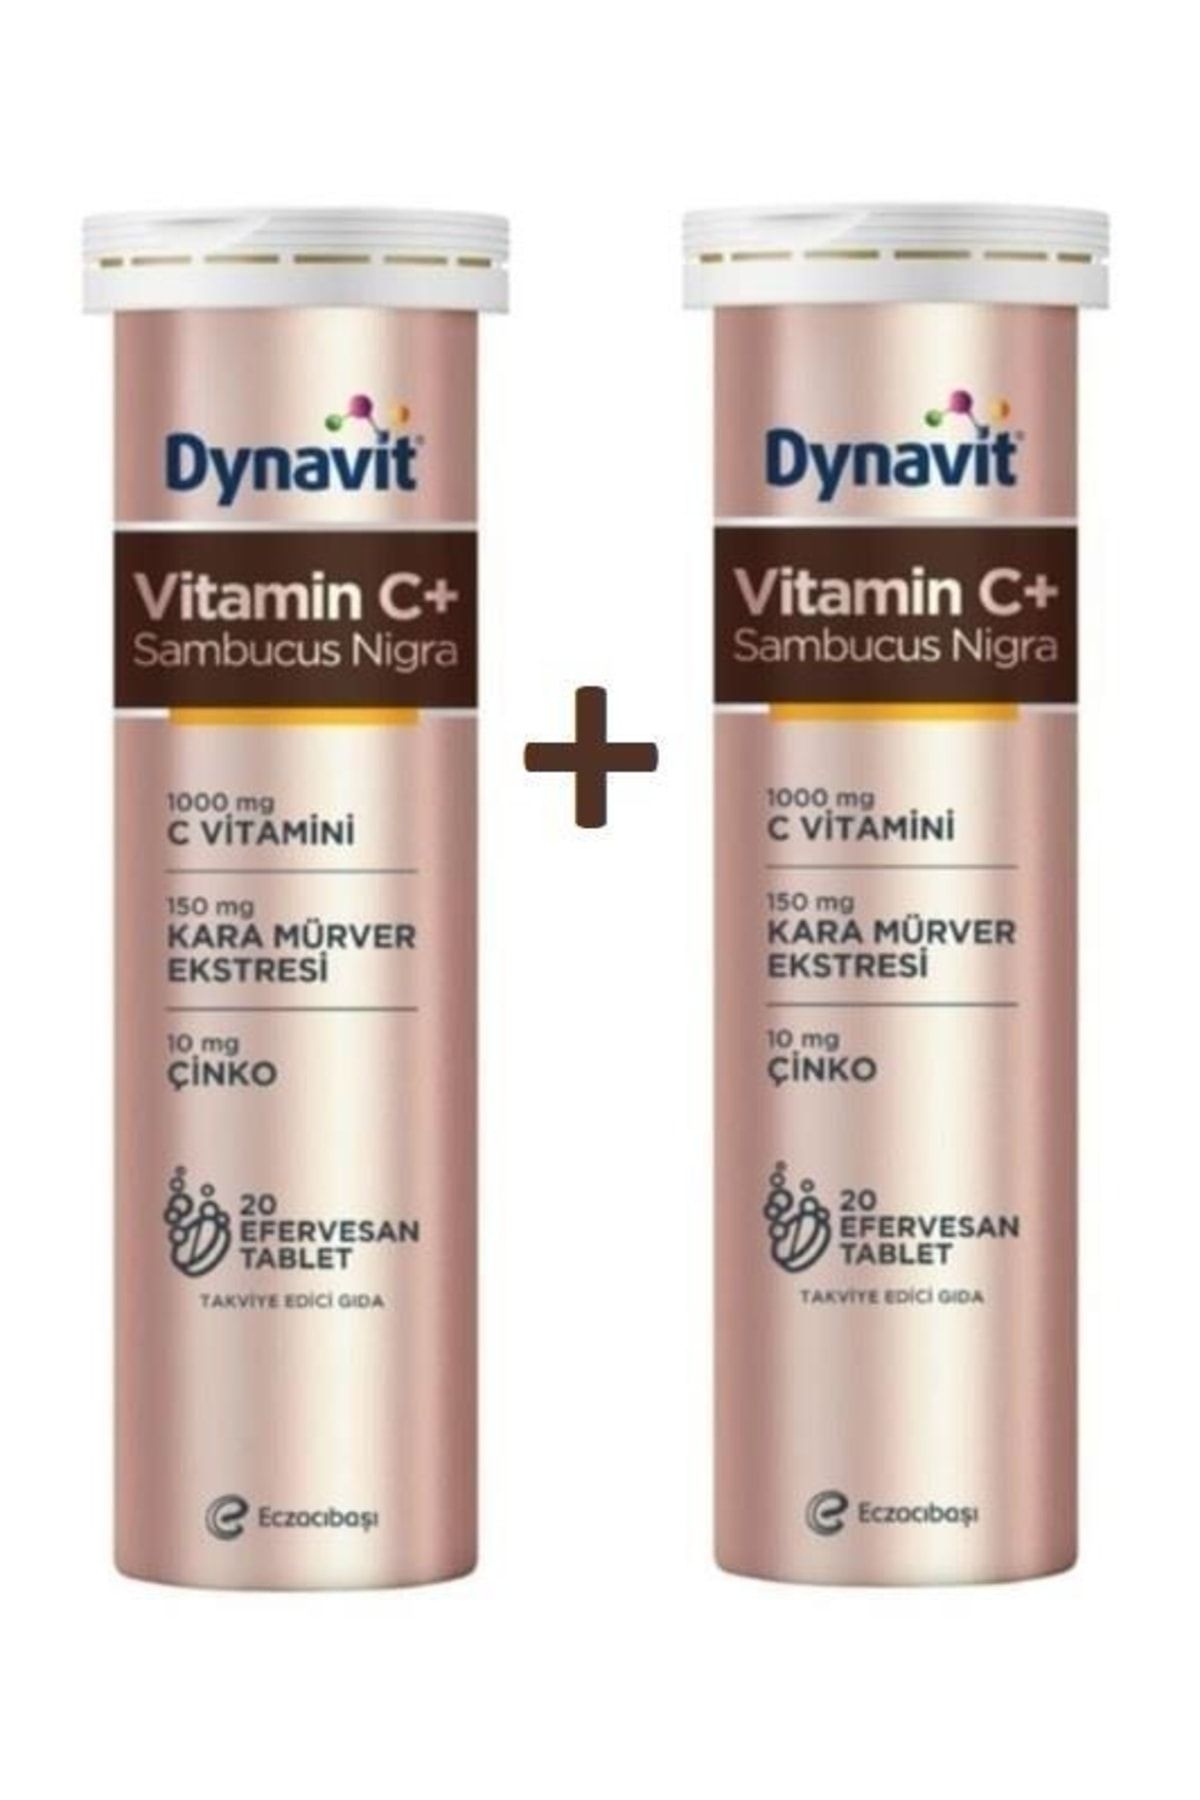 Eczacıbaşı Dynavit Vitamin C+ Sambucus Nigra 20 Efervesan Tablet 2 Adet